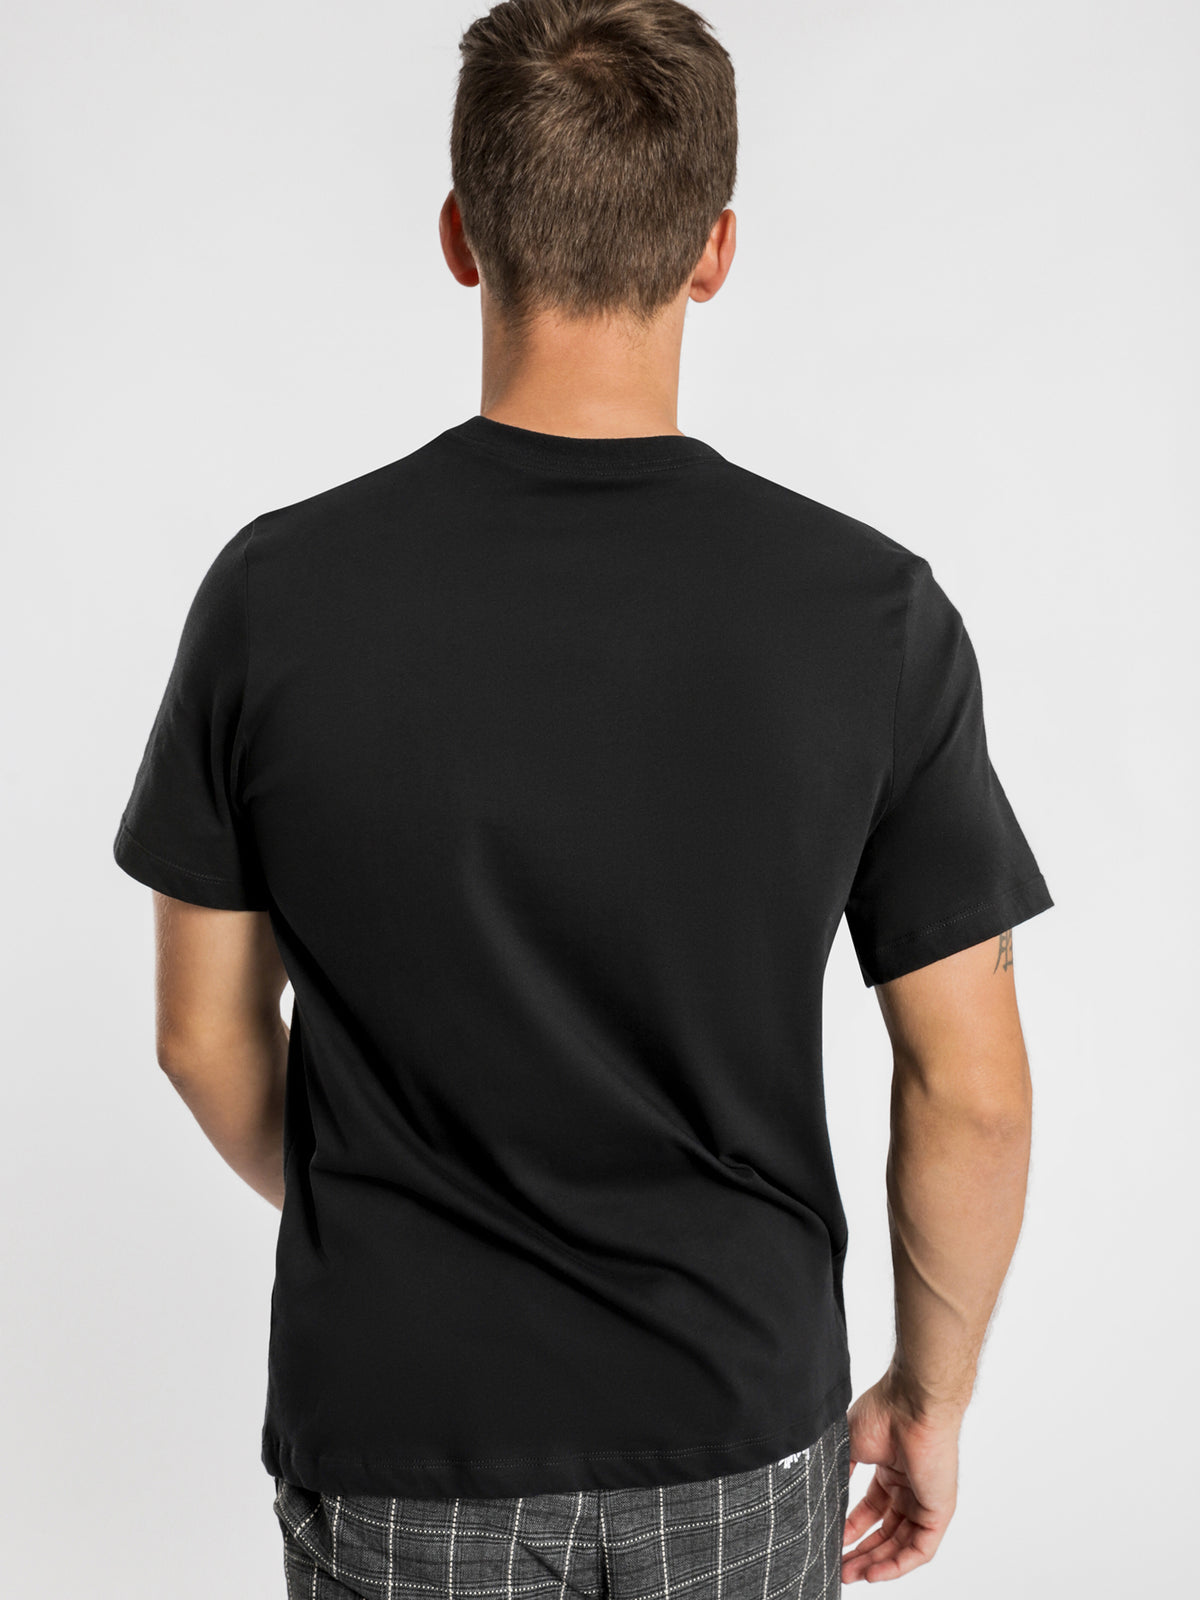 Just Do It Logo Short Sleeve T-Shirt in Black